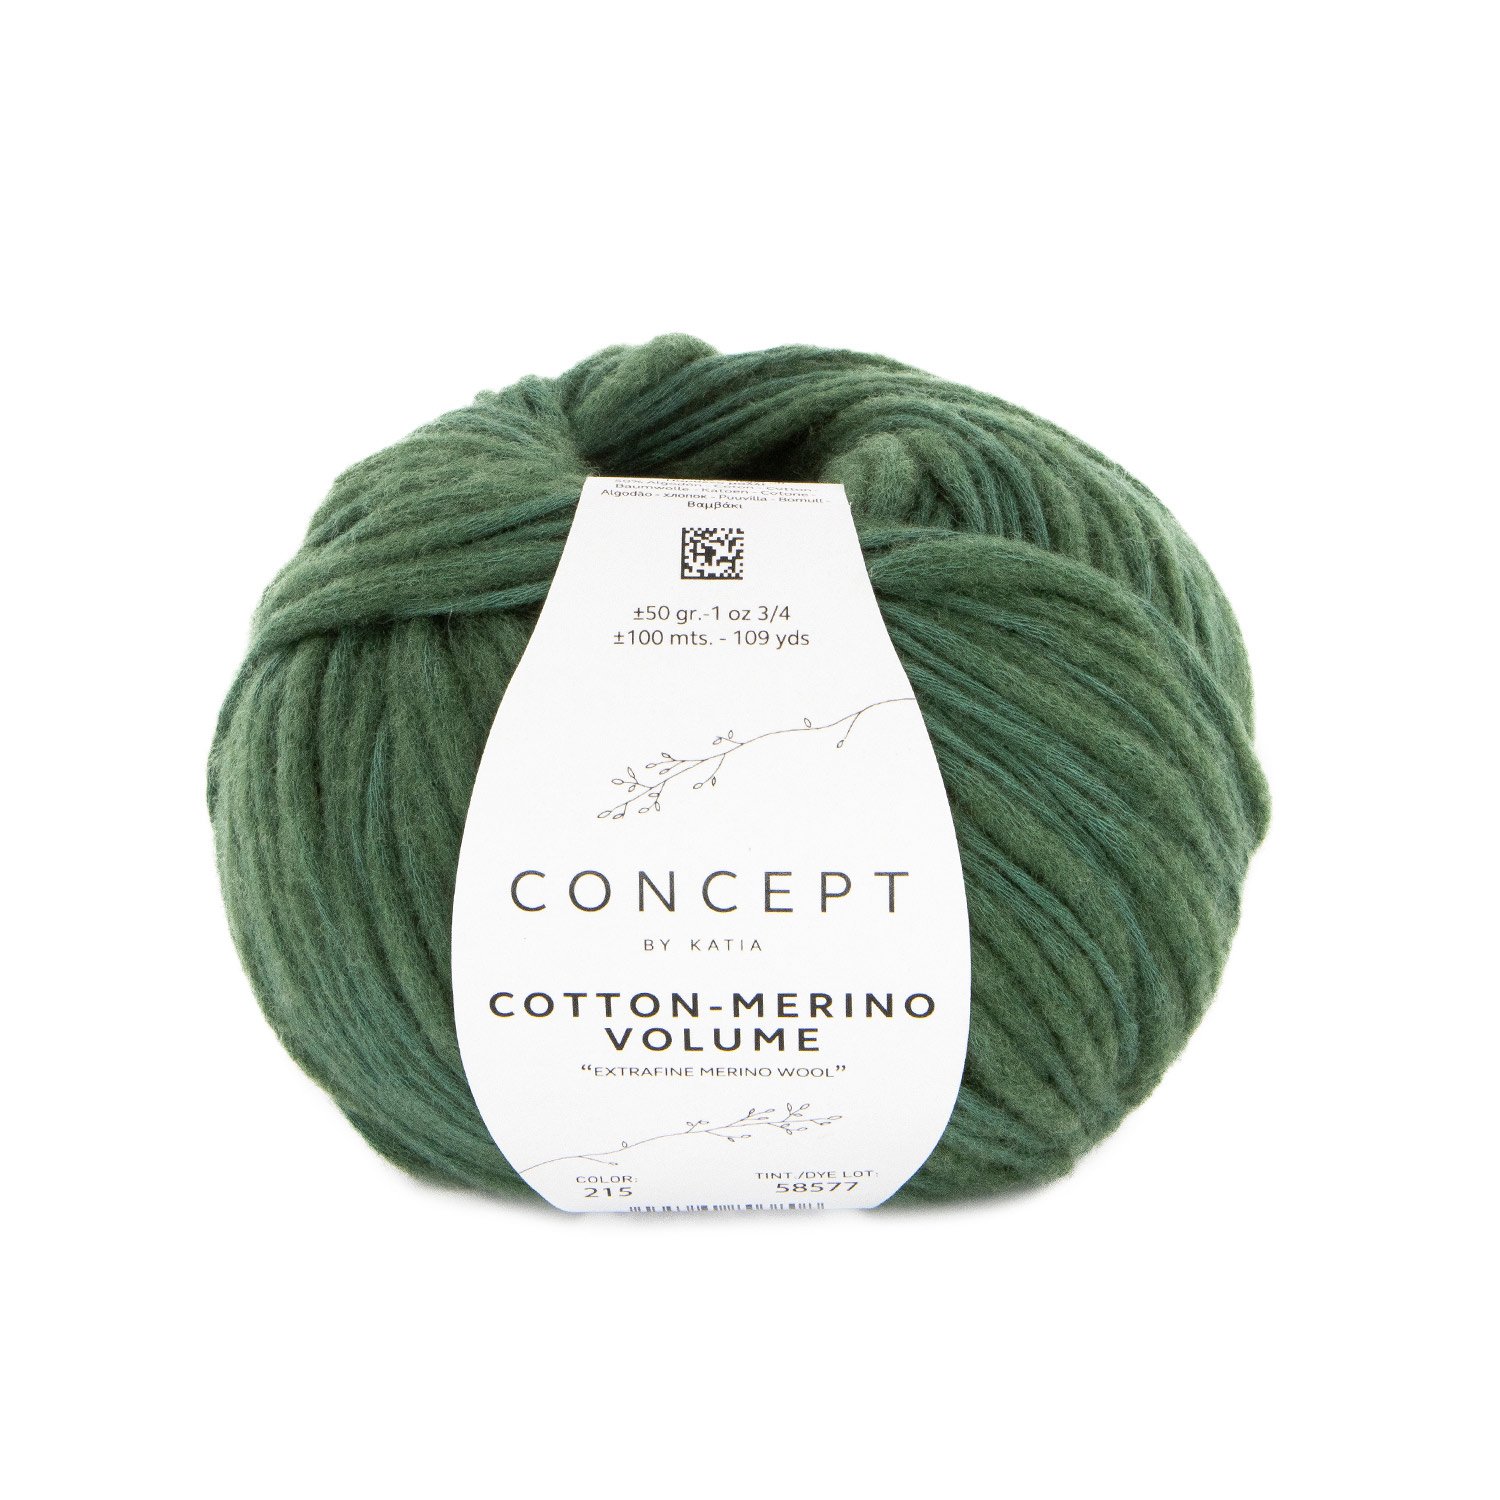 KATIA CONCEPT COTTON-MERINO VOLUME 215 - сосновый зеленый